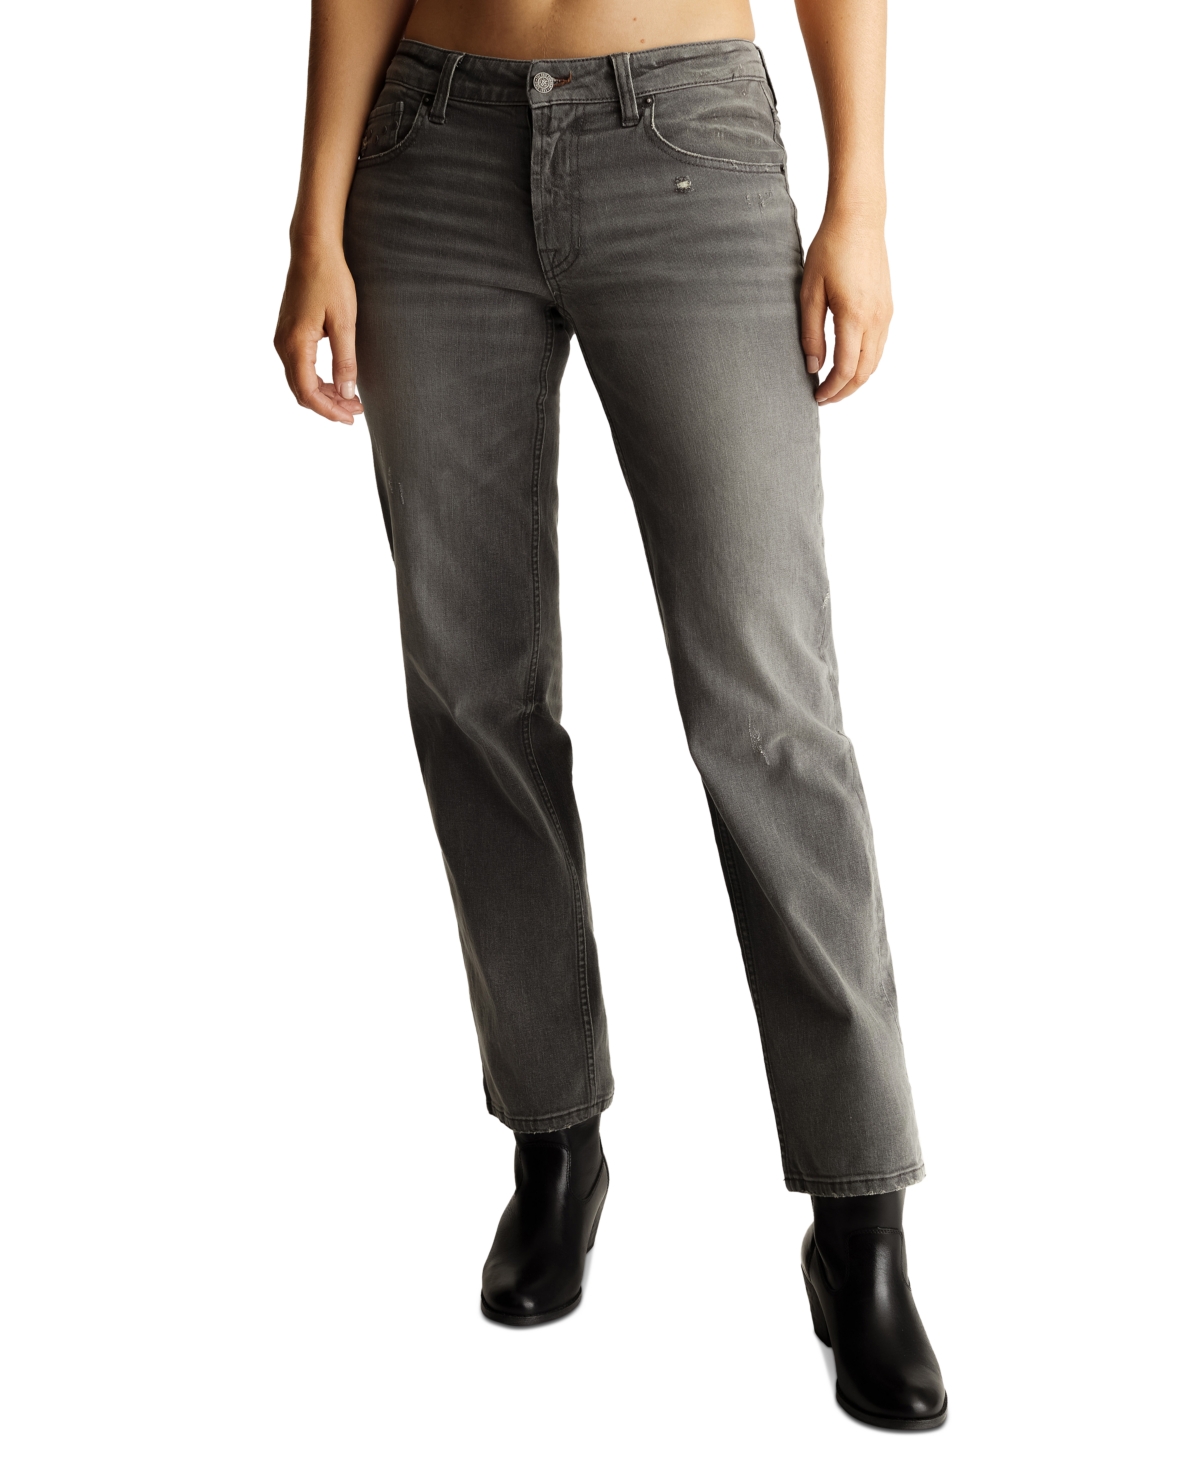 Women's Low-Rise Straight-Leg Studded Jeans - Rowan Wash, Grey/black Wash